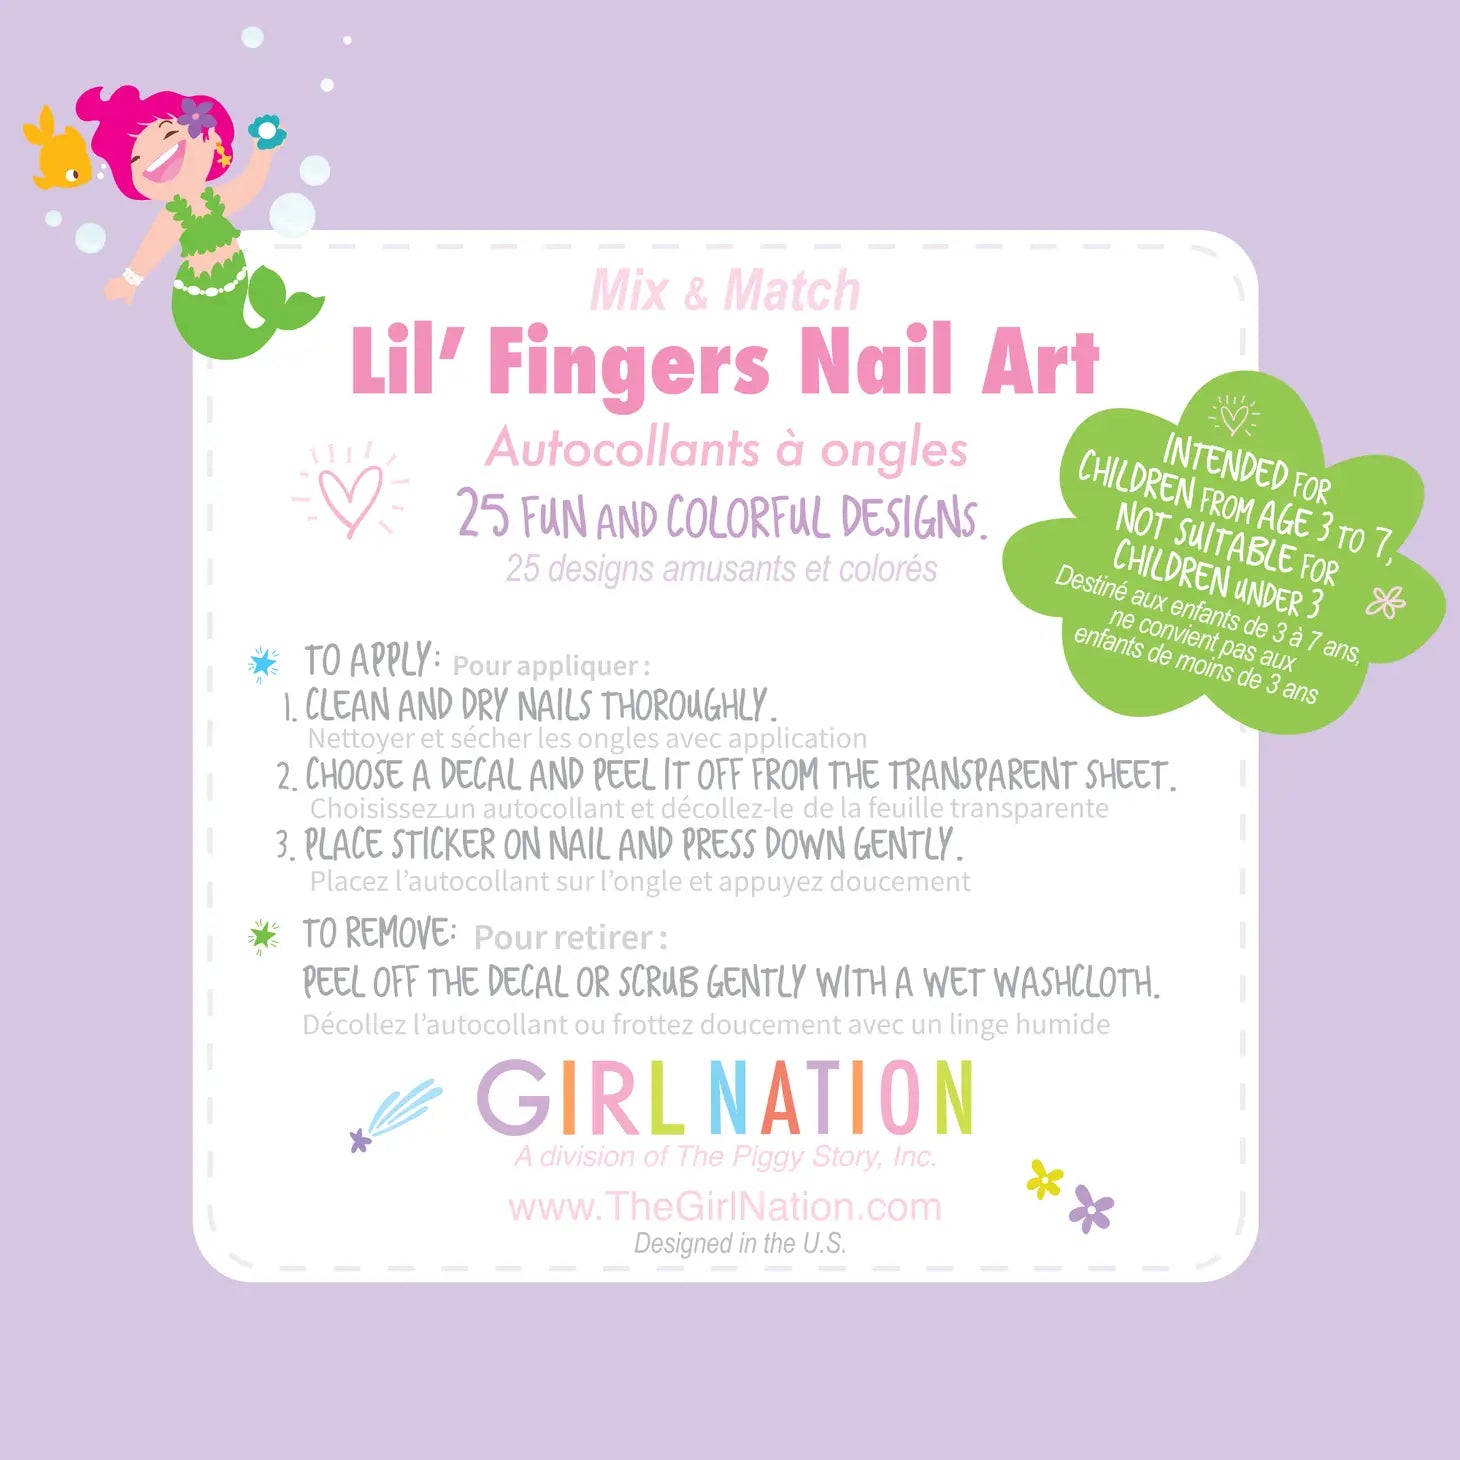 Lil' Fingers Nail Art- Mermaids & Friends - Lulie